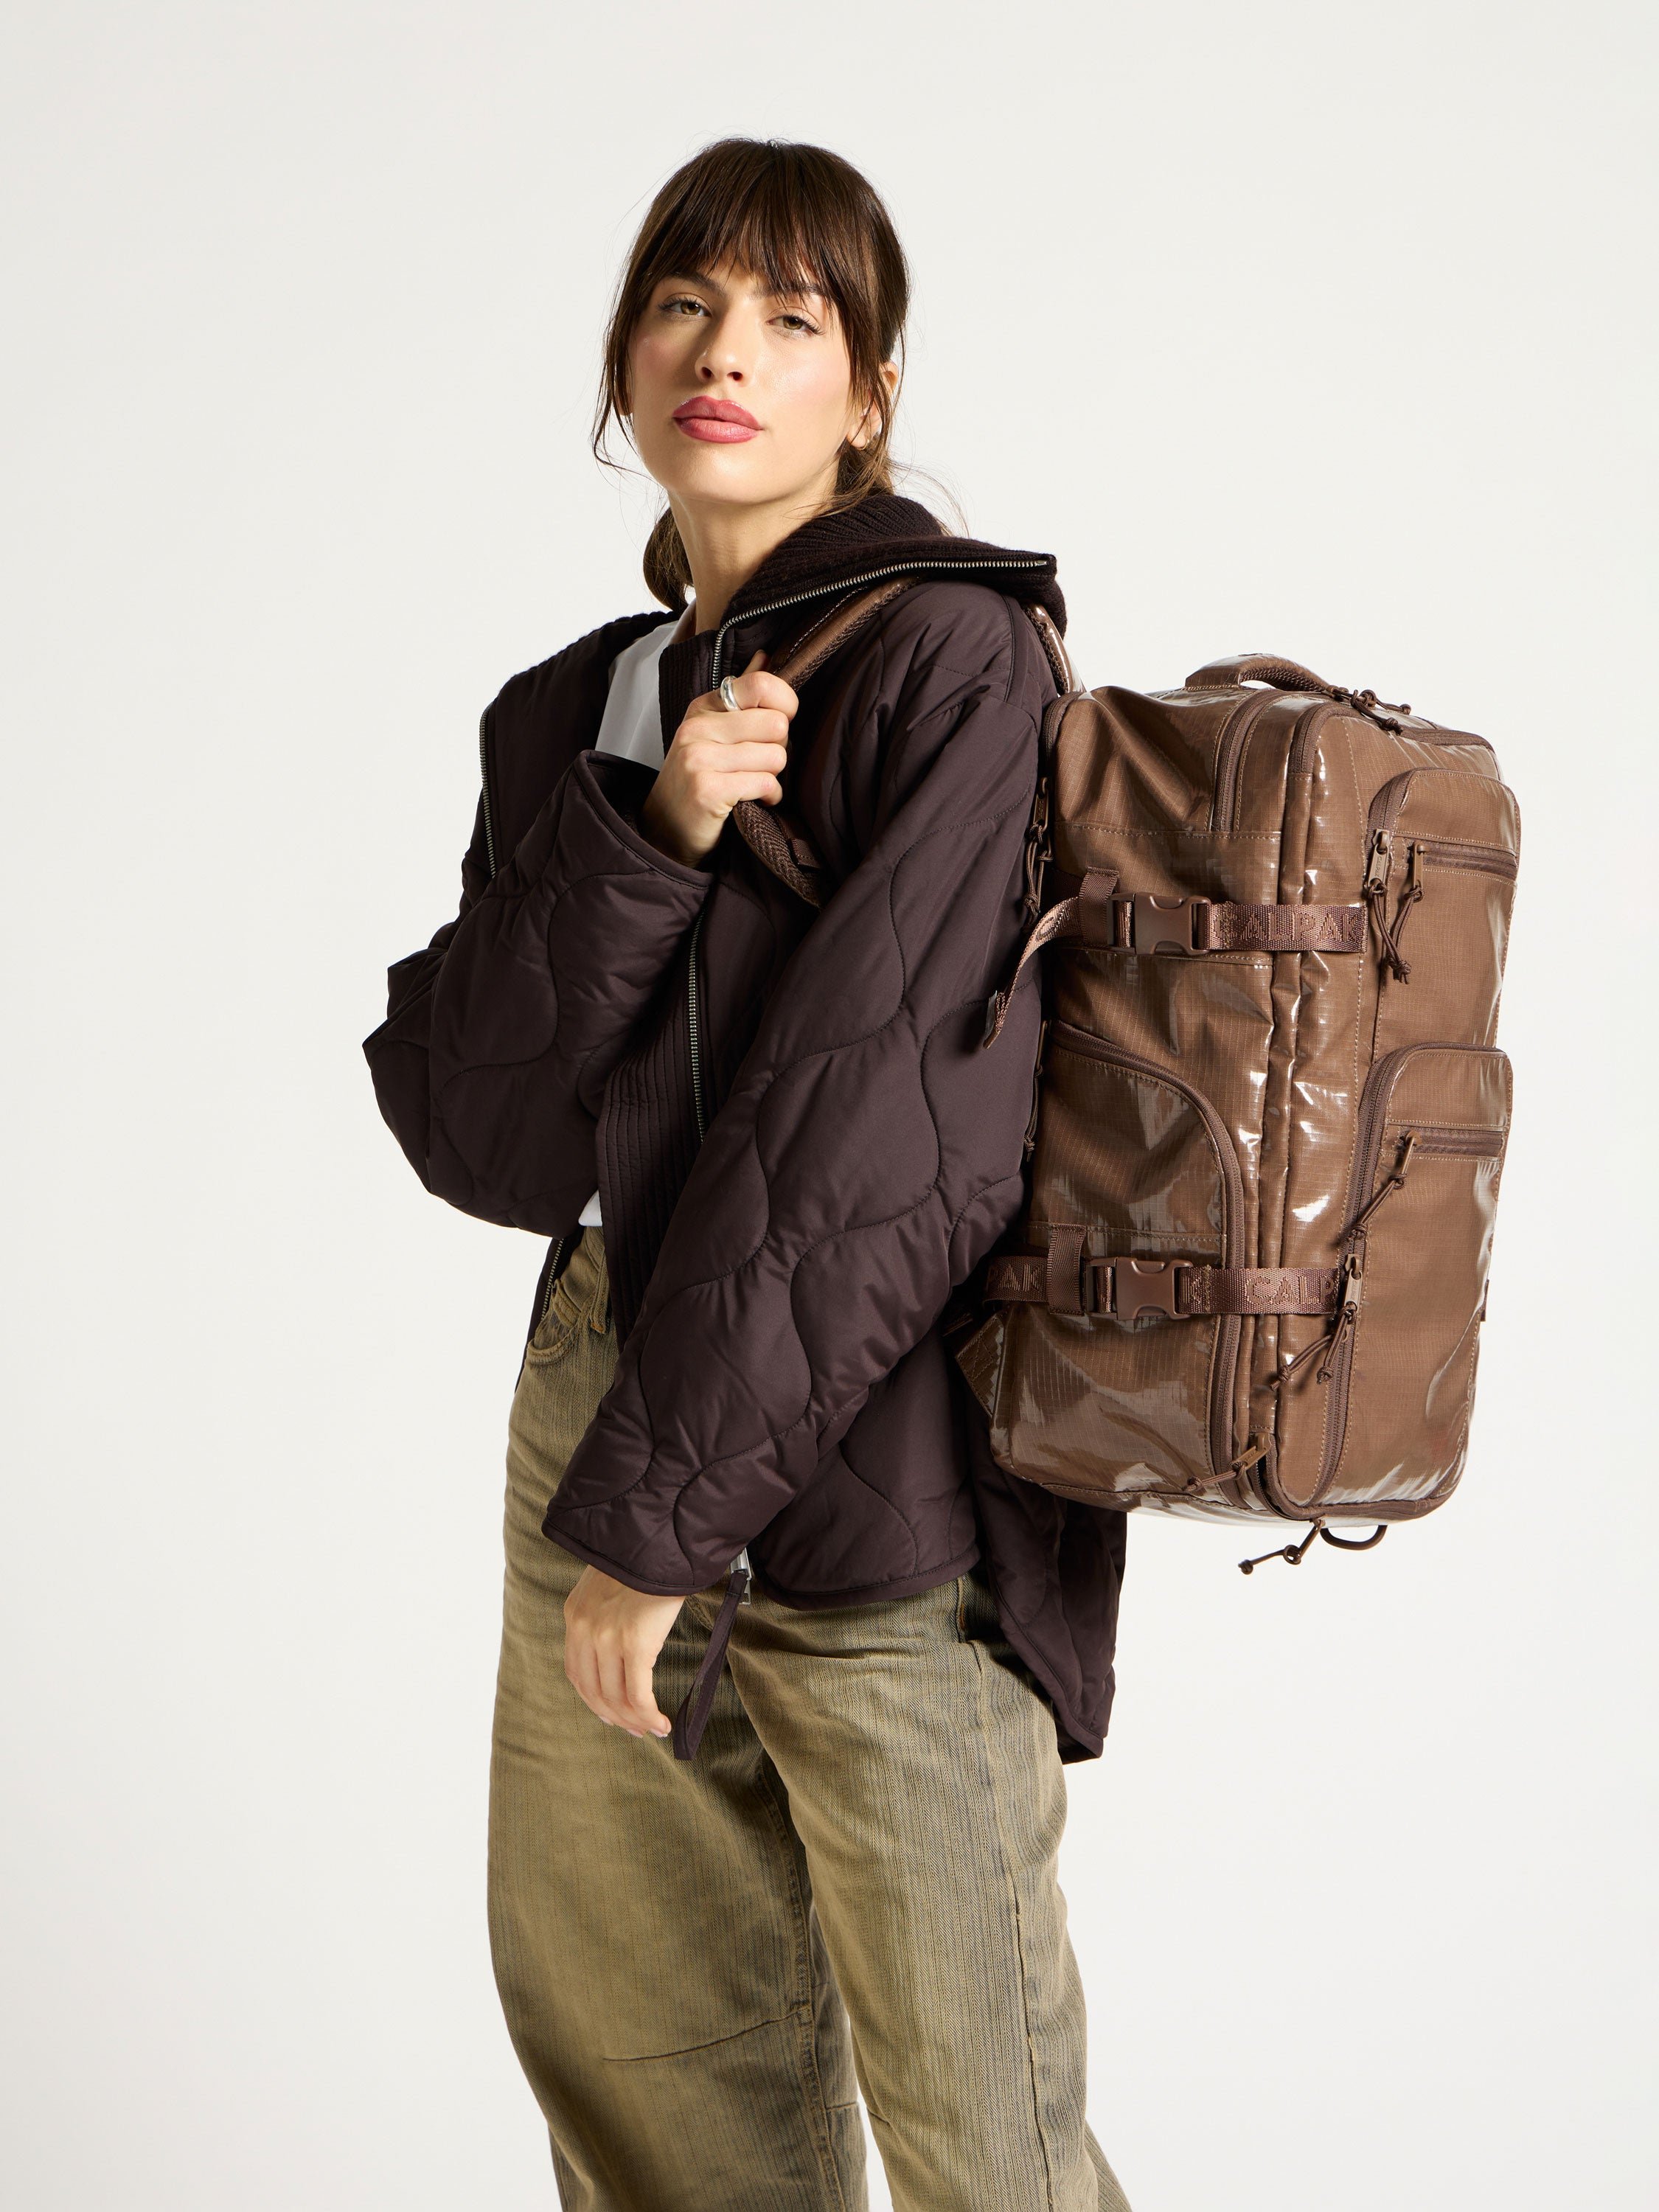 Model wearing brown CALPAK Laptop Backpack Duffel for hiking